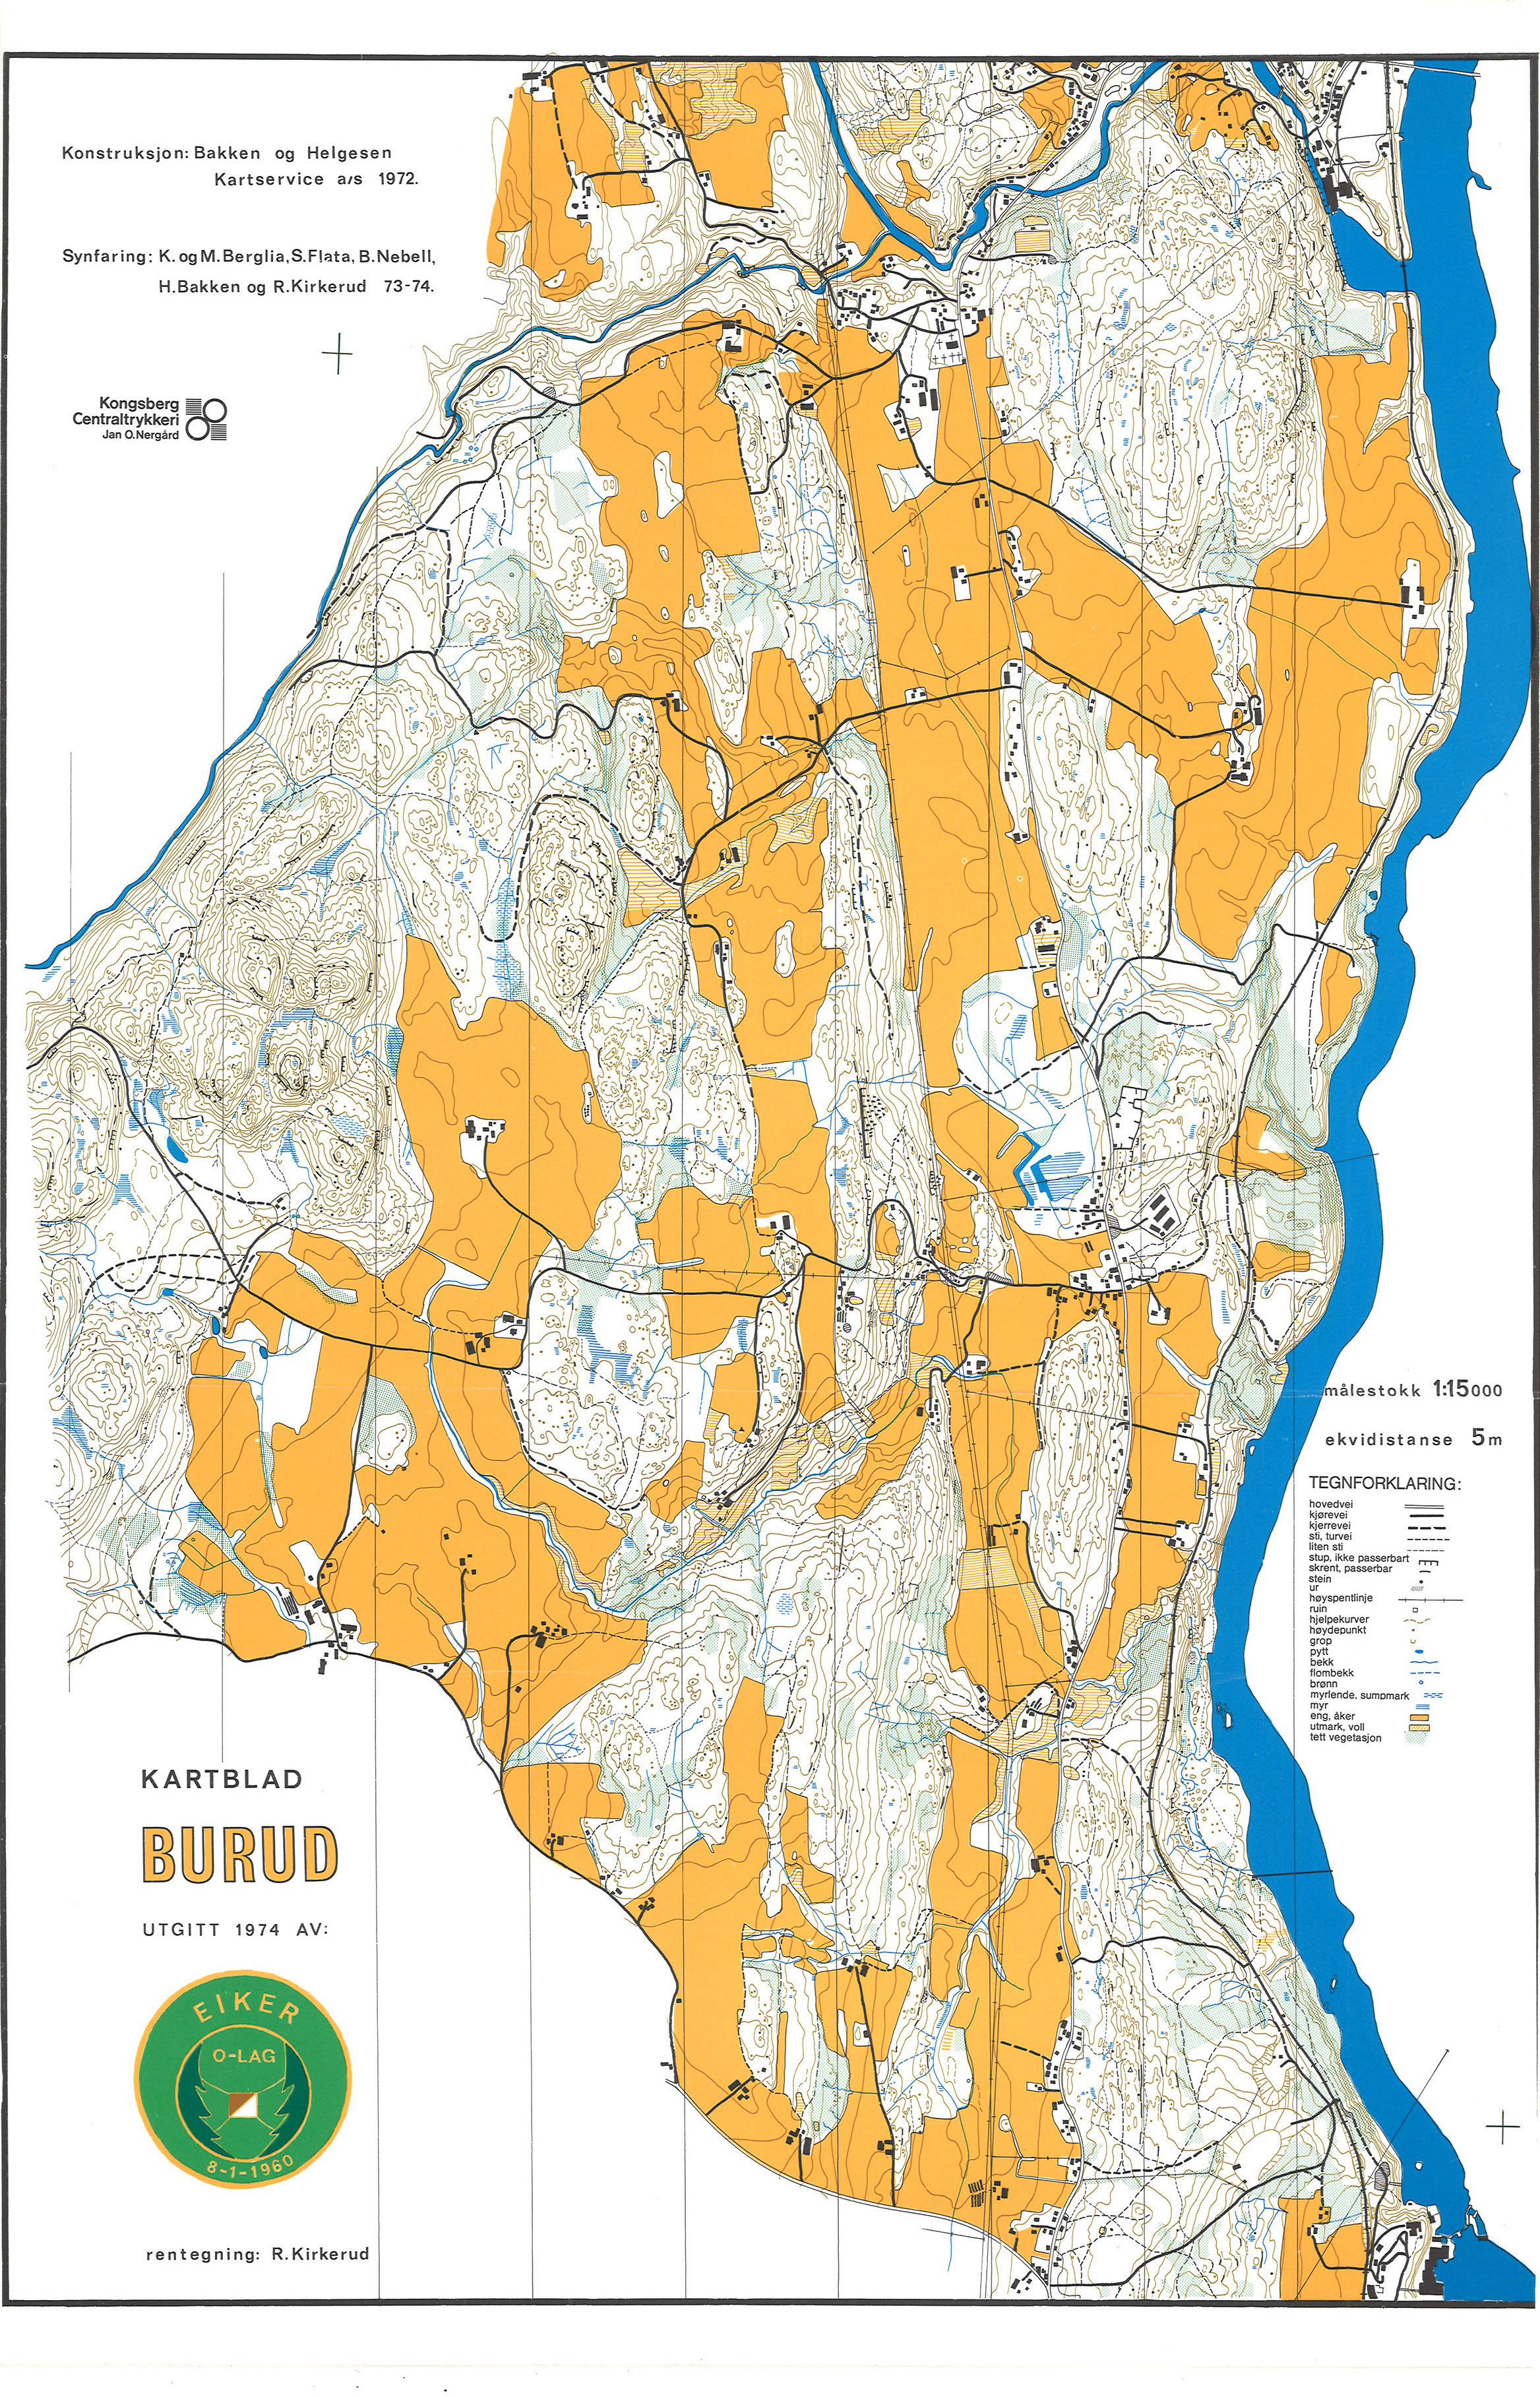 Burud (01/01/1974)